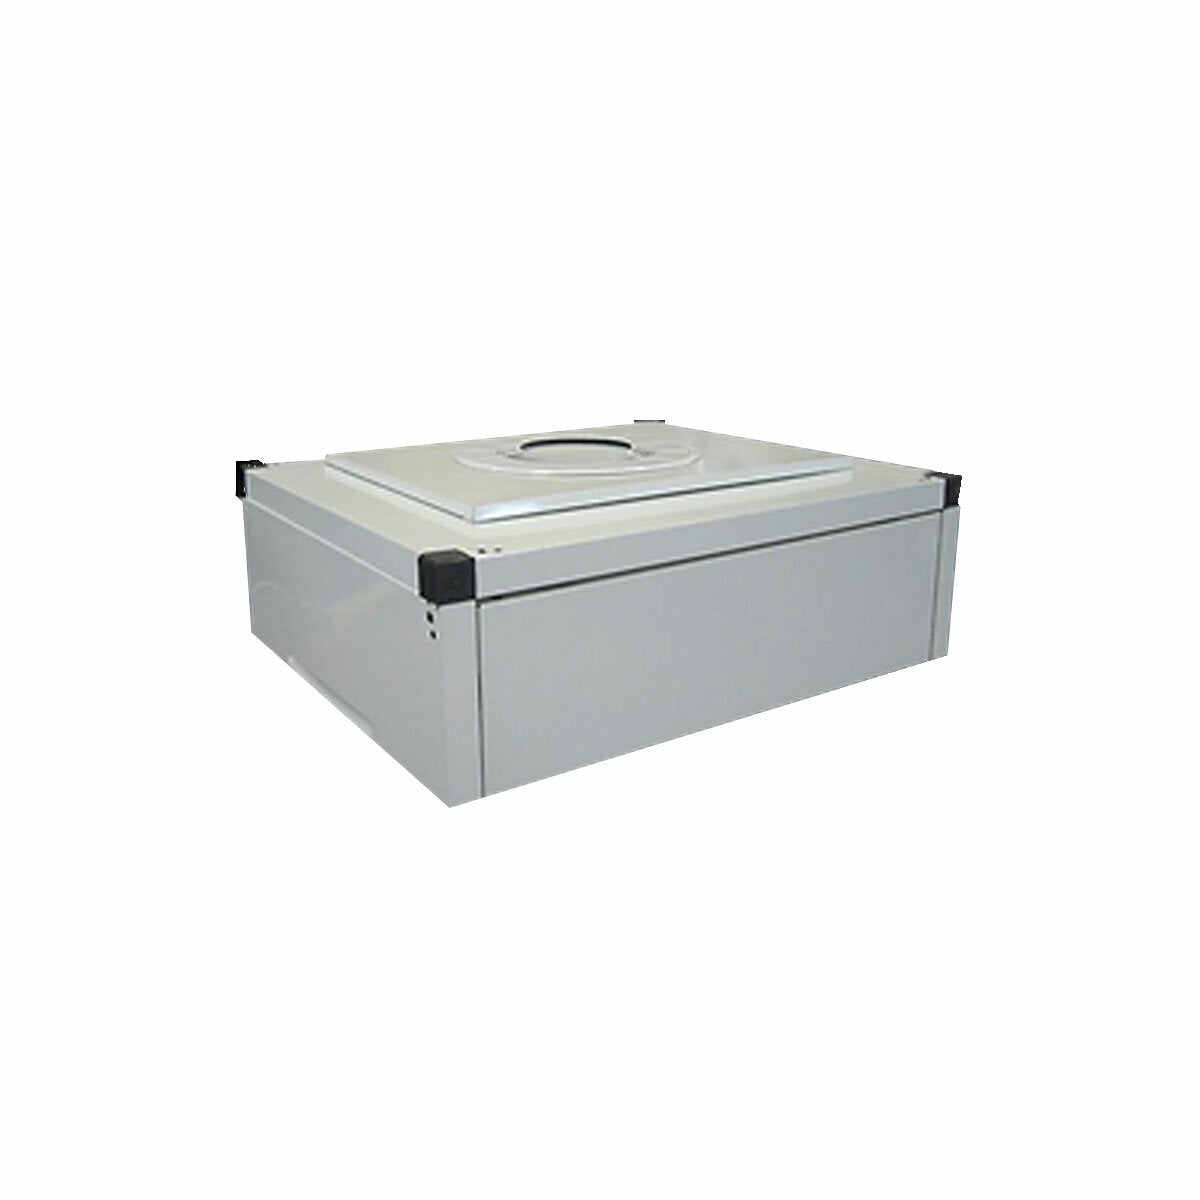 White universal water heater cover boiler cover box H 108 cm - W 60 cm - D 45 cm